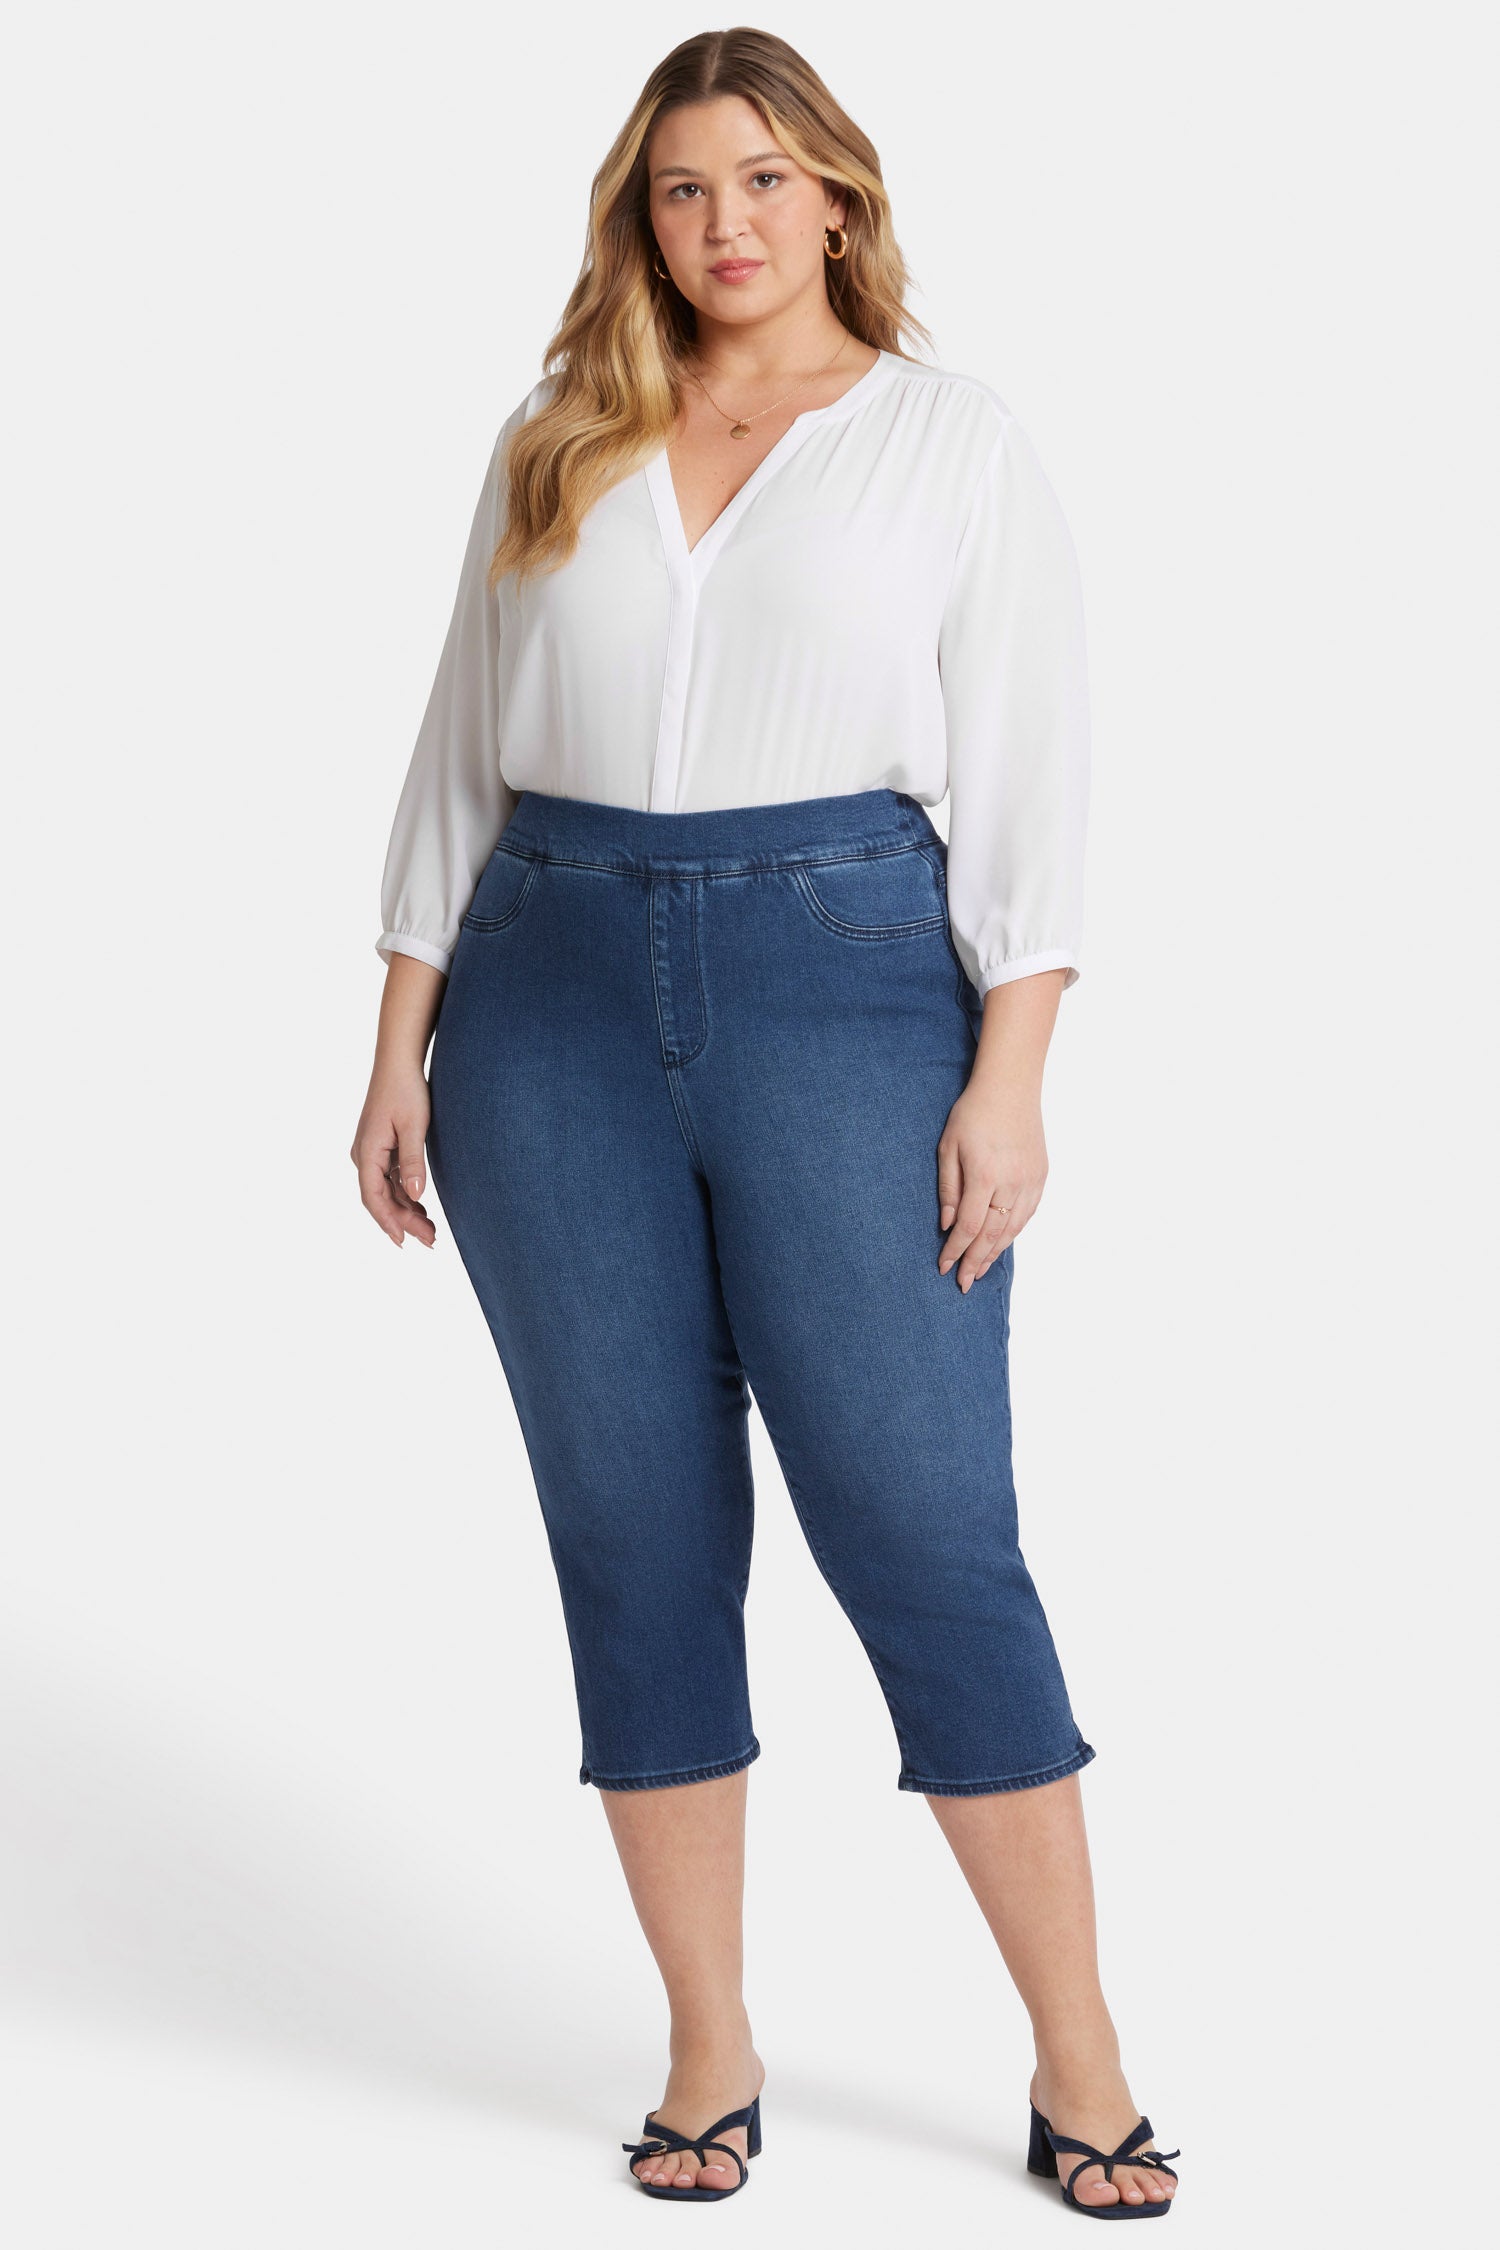 Women's Plus Size Crops and Capri Jeans – NYDJ Apparel